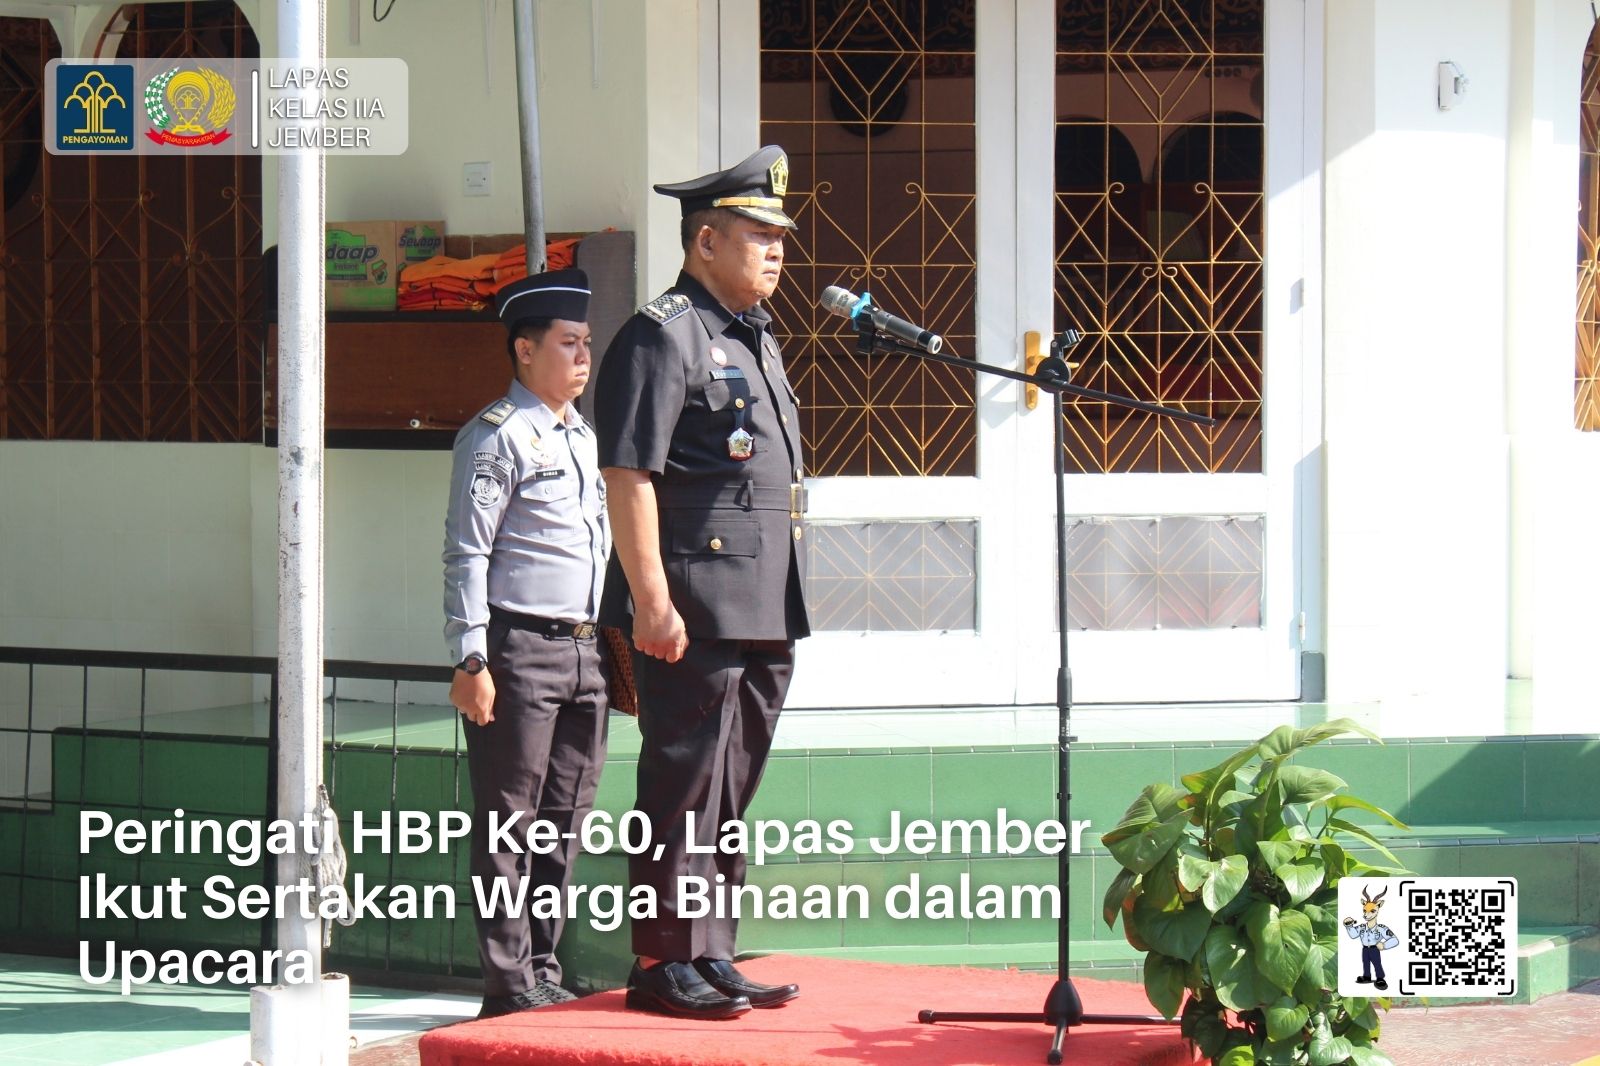 Peringati HBP Ke-60, Lapas Jember Ikut Sertakan Warga Binaan dalam Upacara